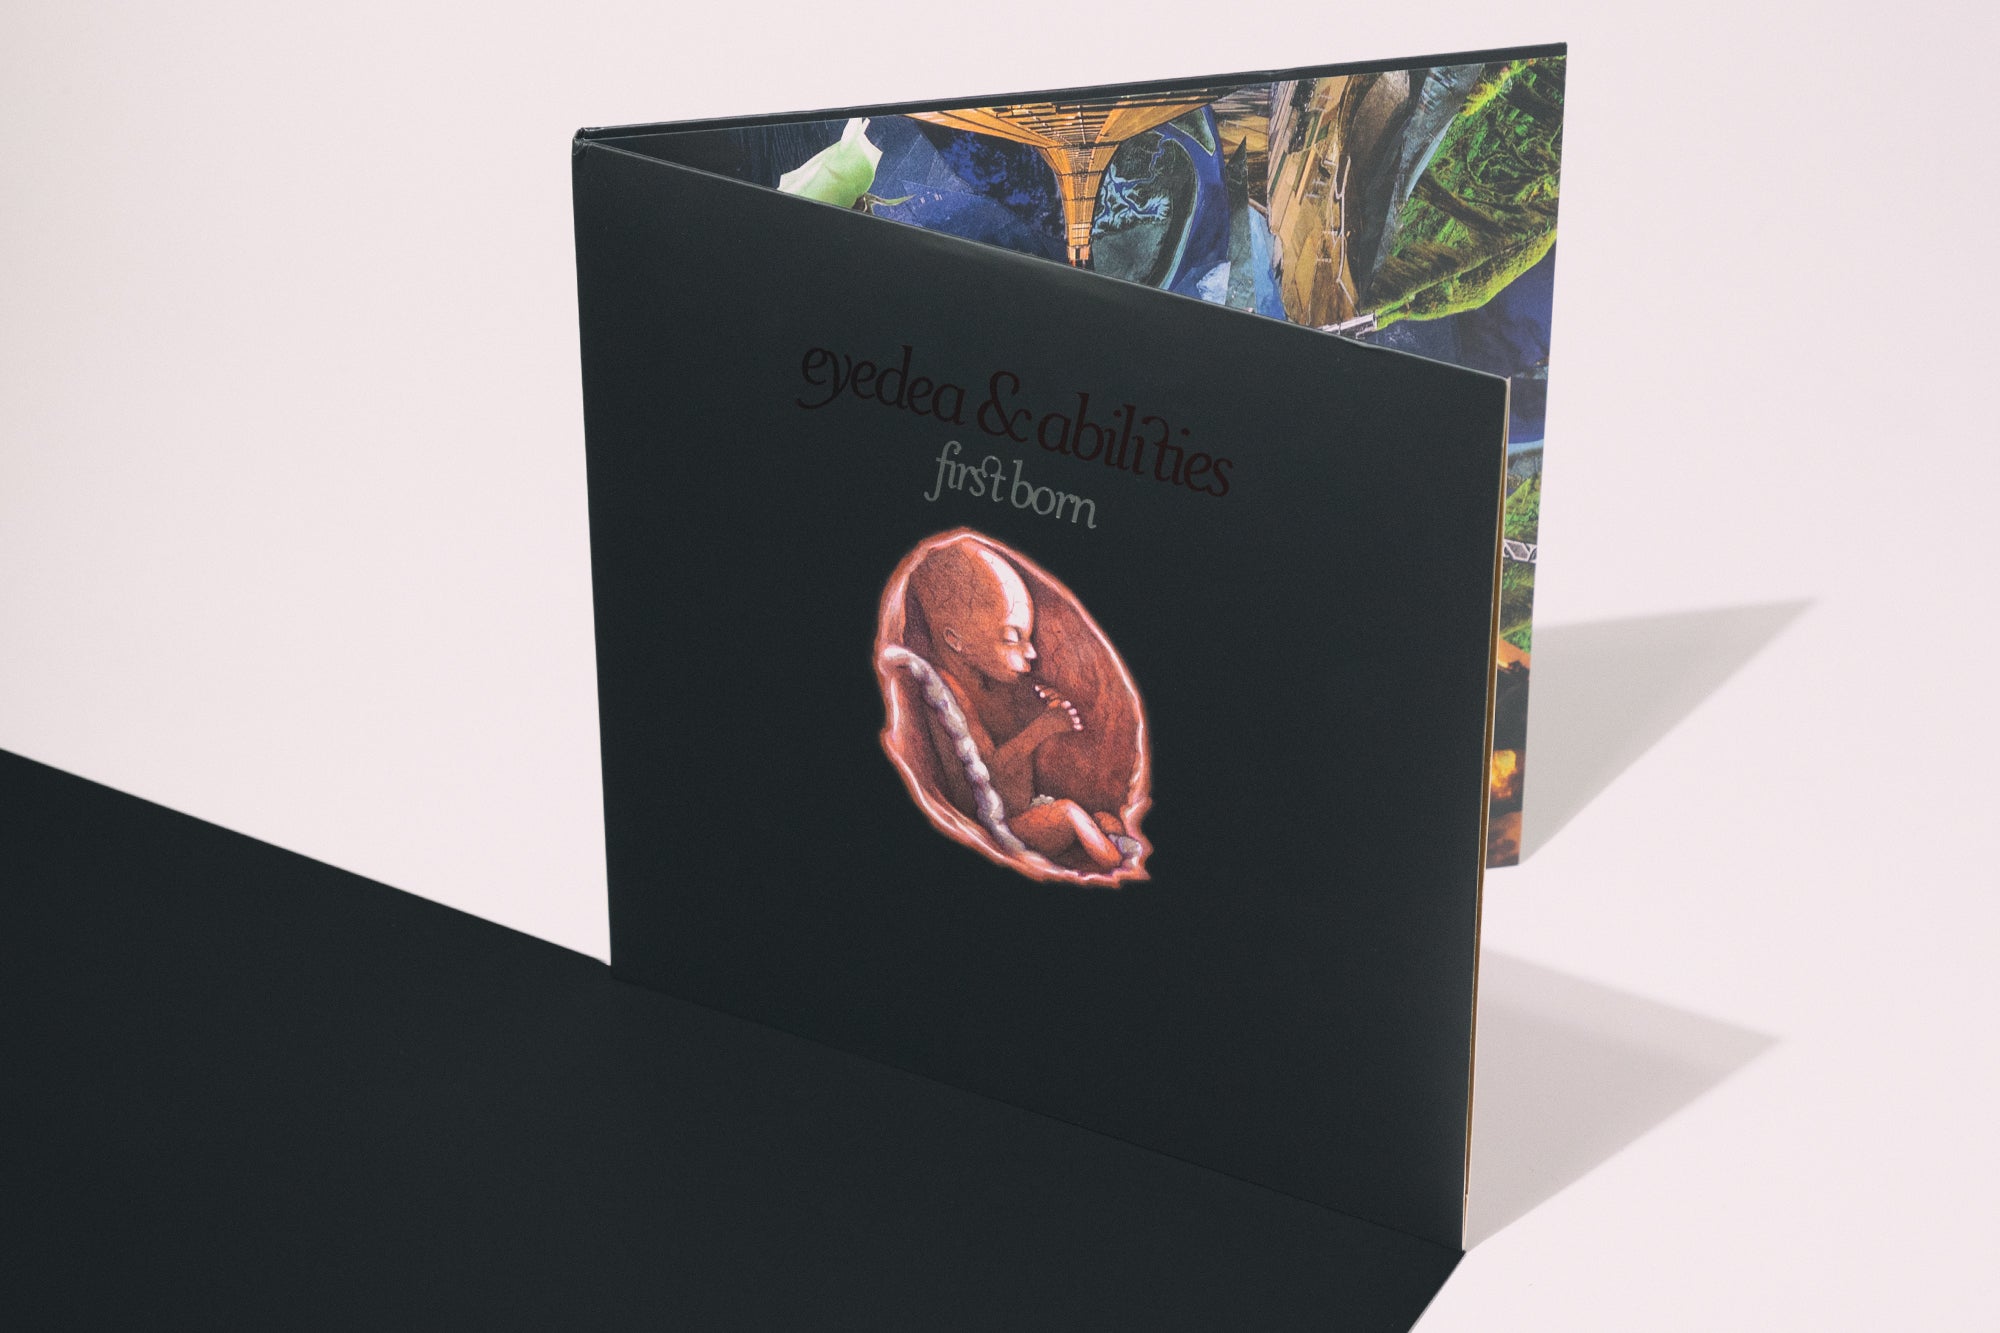 Eyedea & Abilities 'First Born' - Vinyl Me, Please